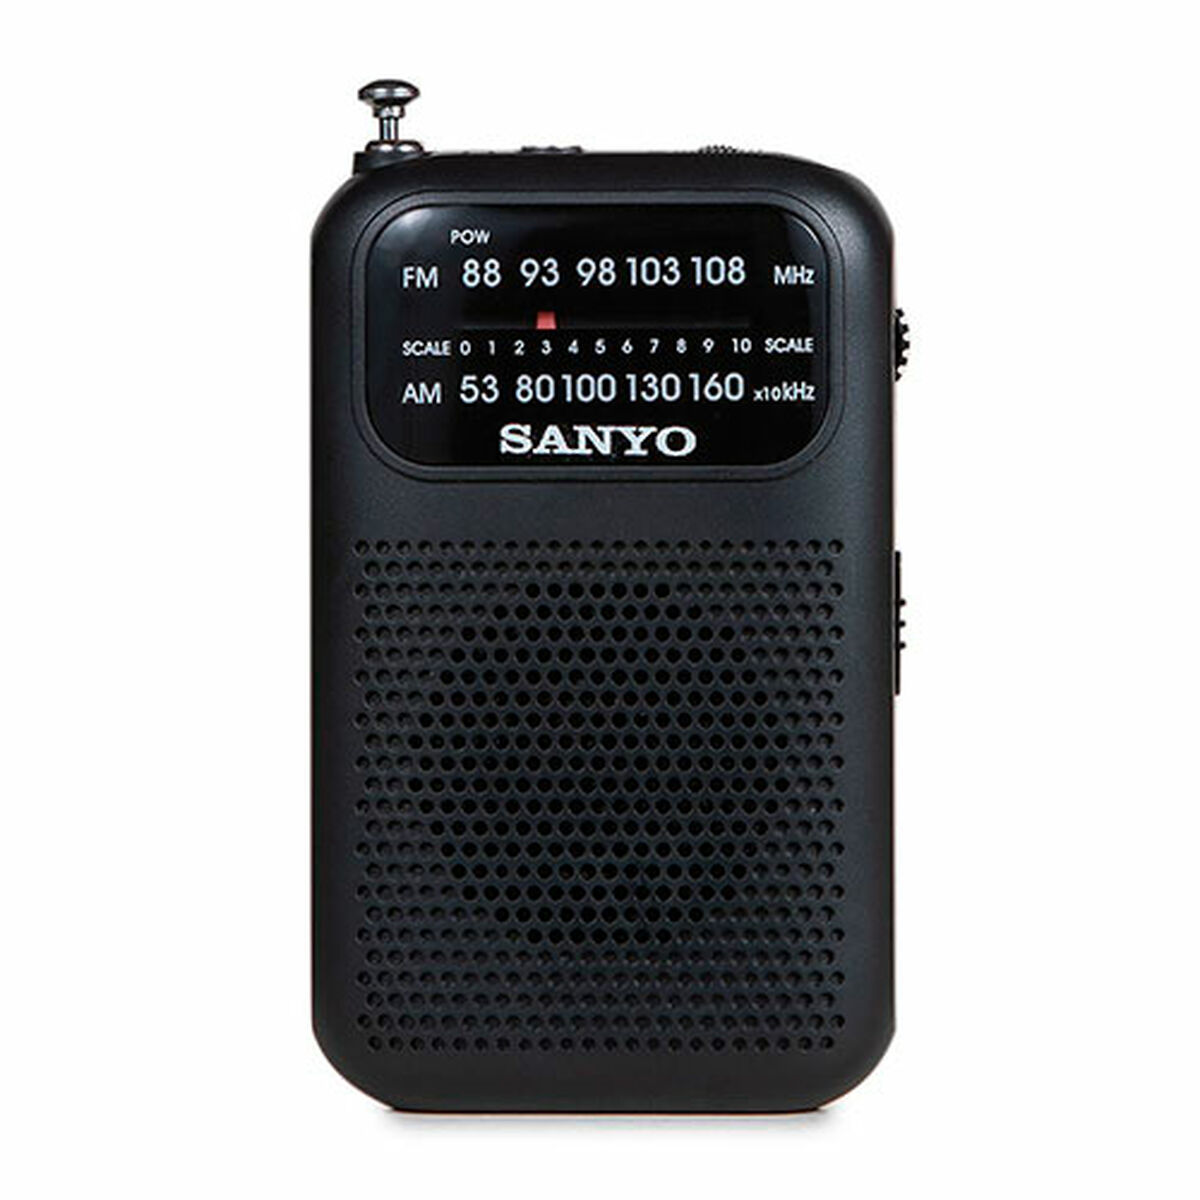 Radio Portatil Aiwa R190RD , sintonizador analógic